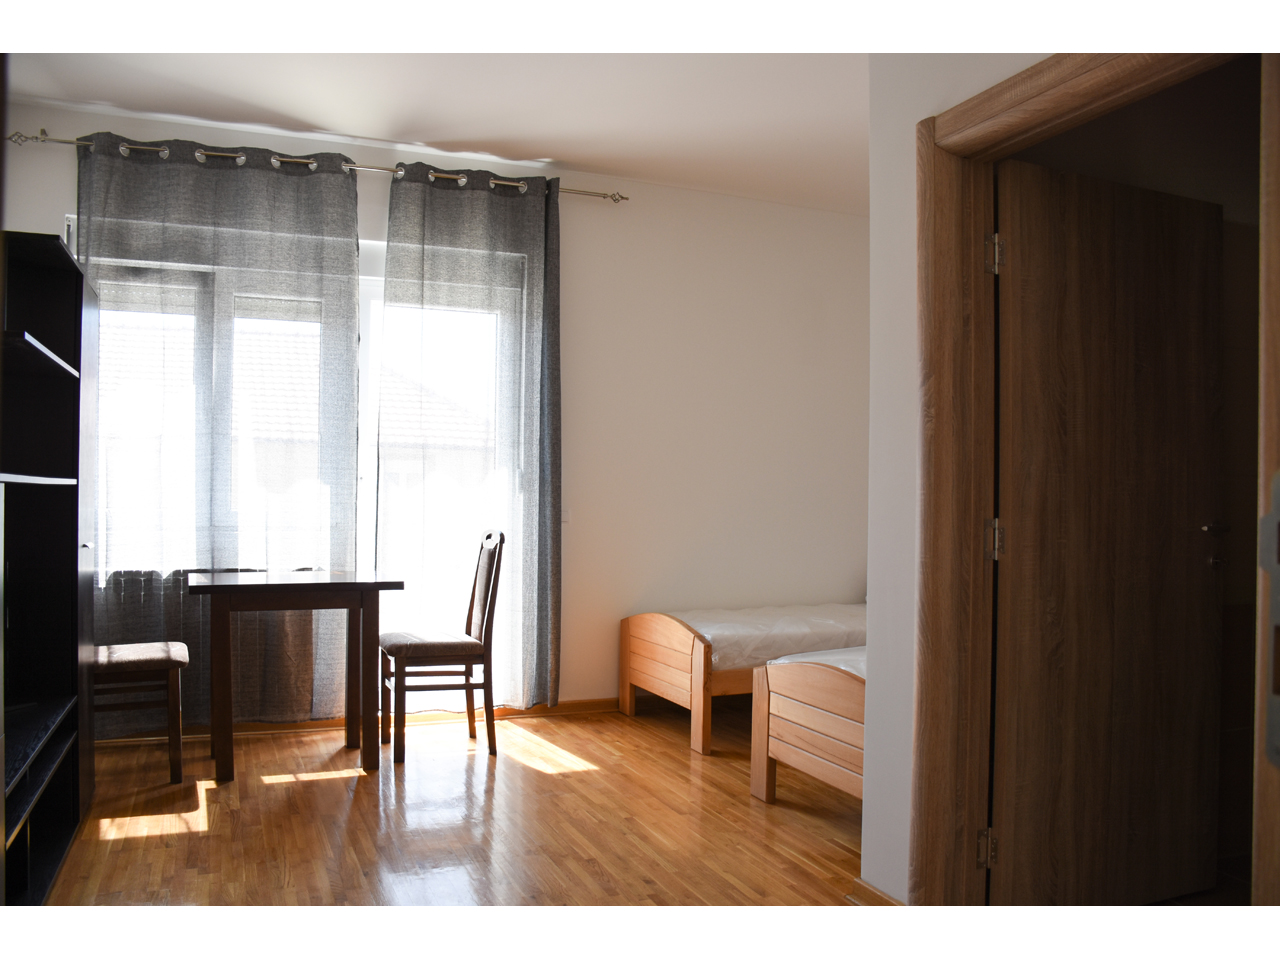 Photo 9 - HOME FOR OLD - HOTEL JAKOVLJEVIC Homes and care for the elderly Belgrade